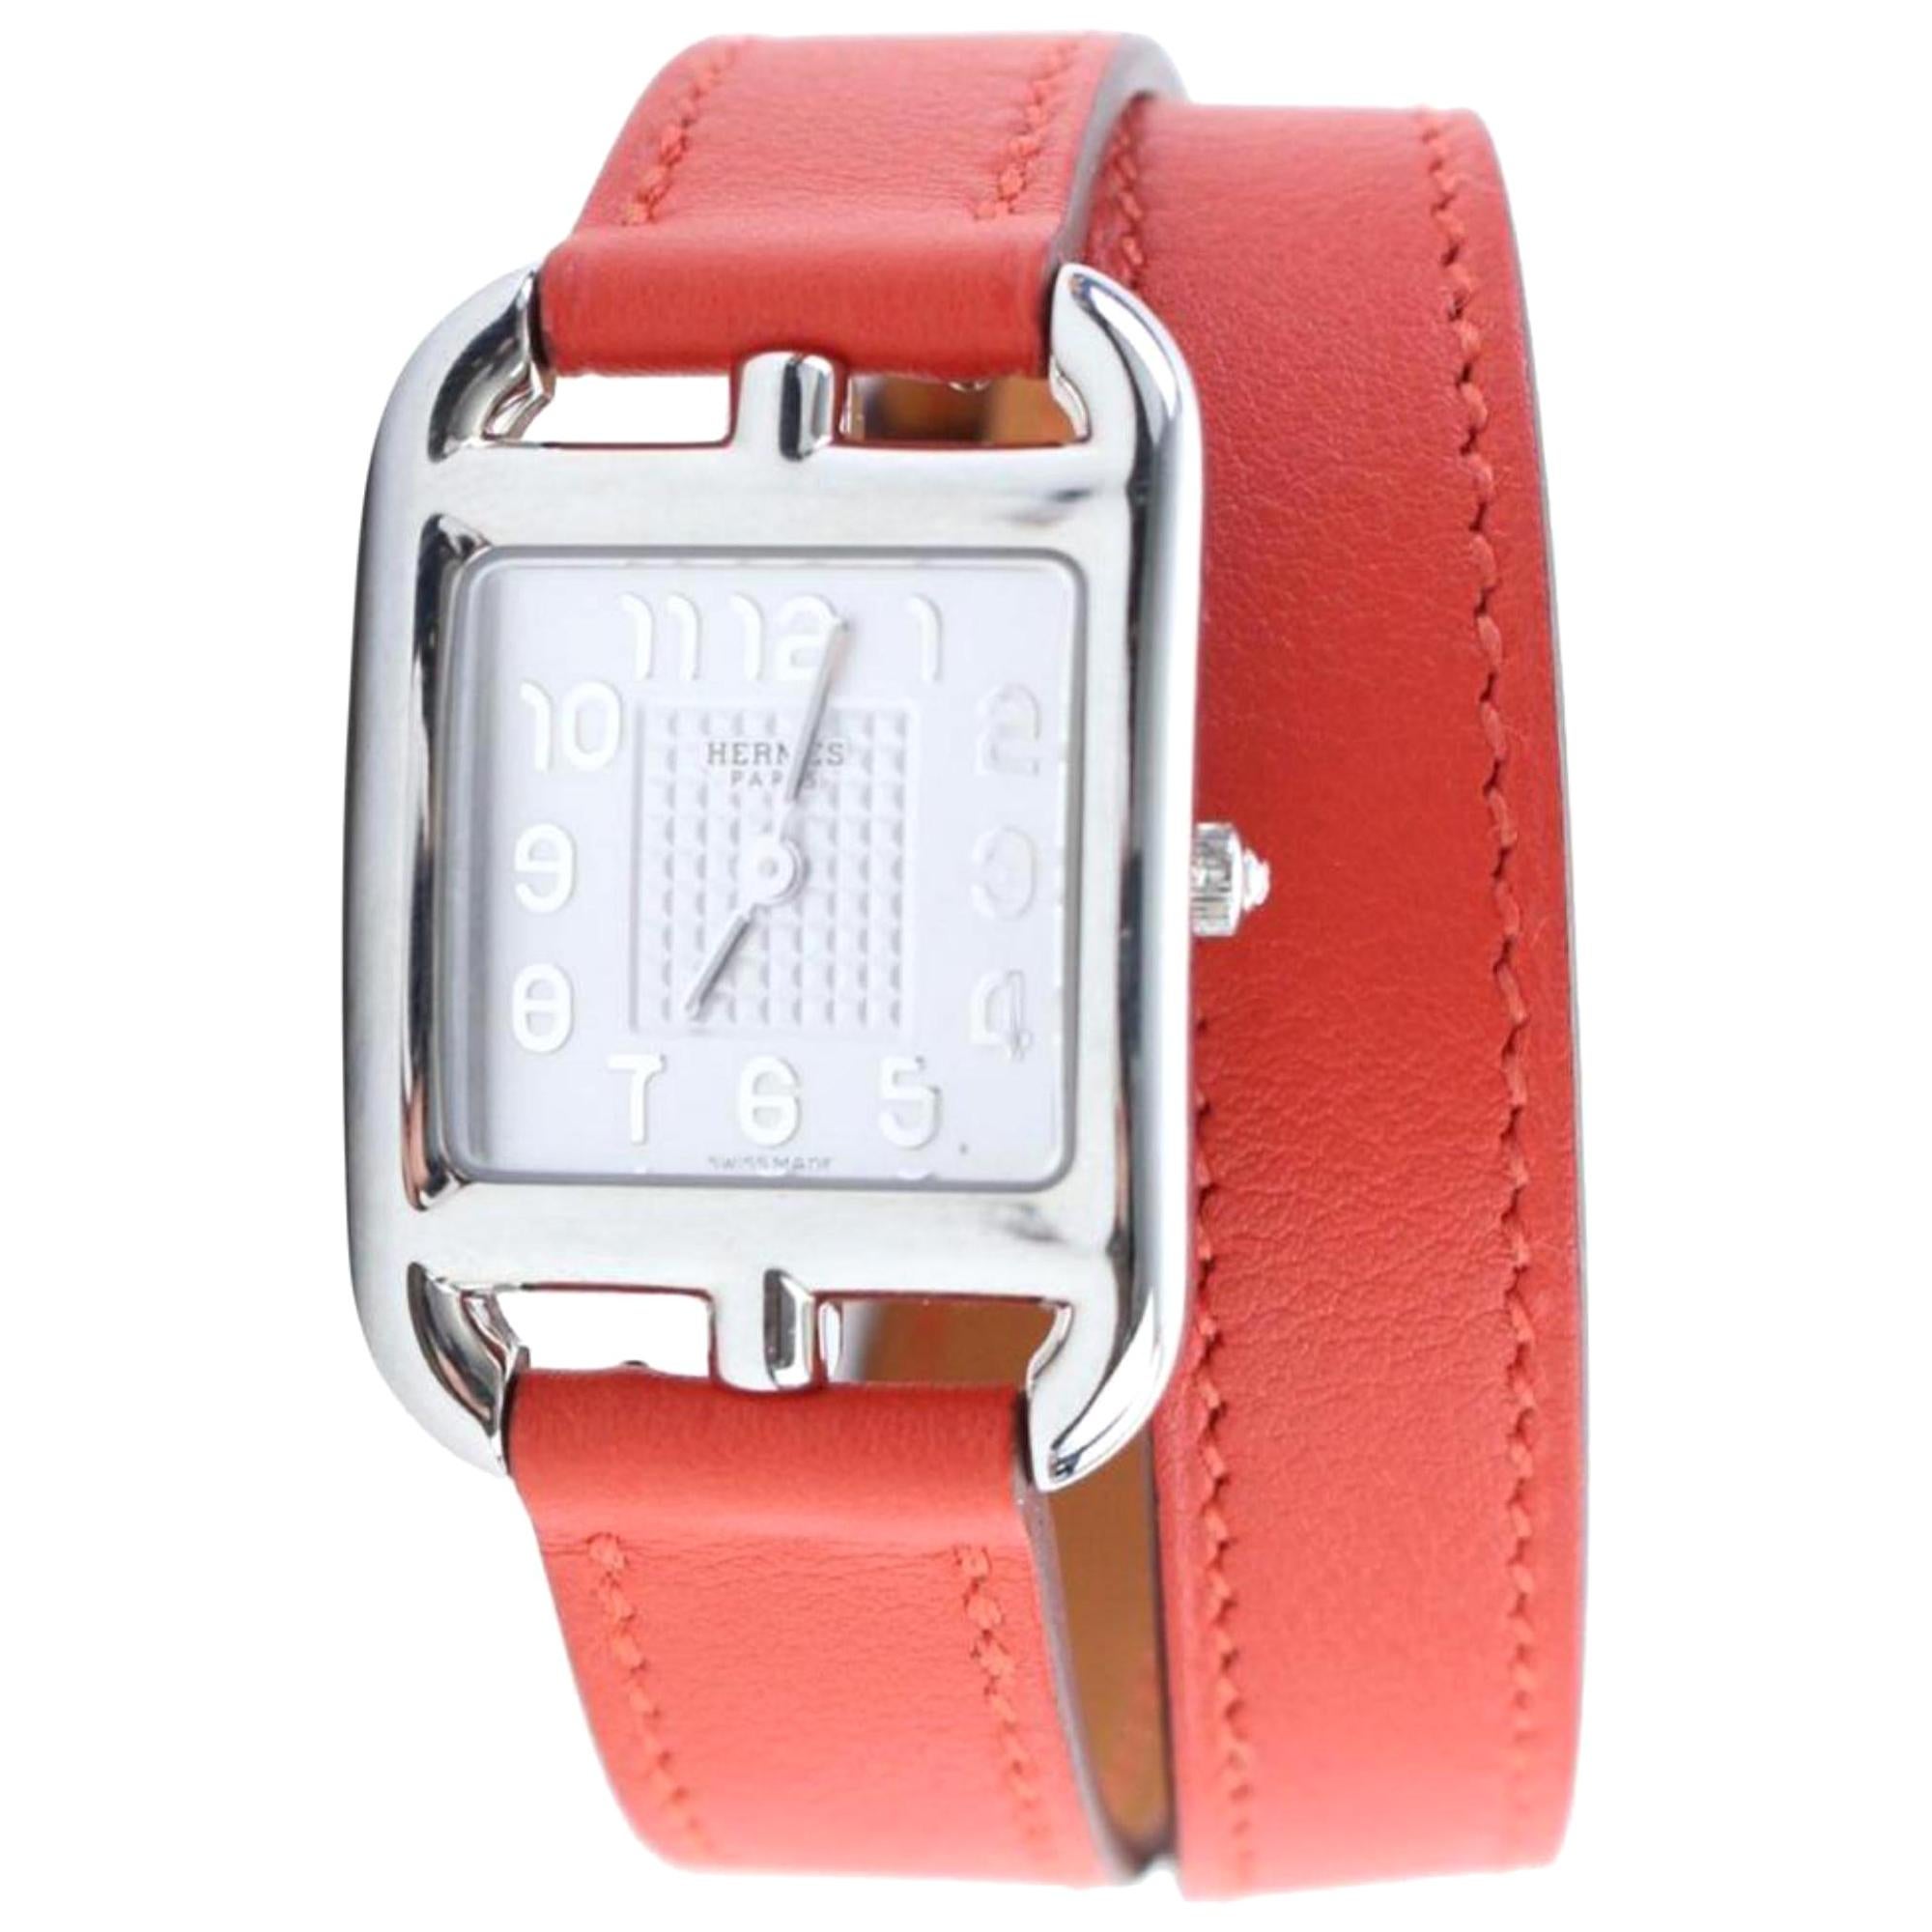 Hermès Red Cape Cod Wrap 9hr0207 Watch For Sale